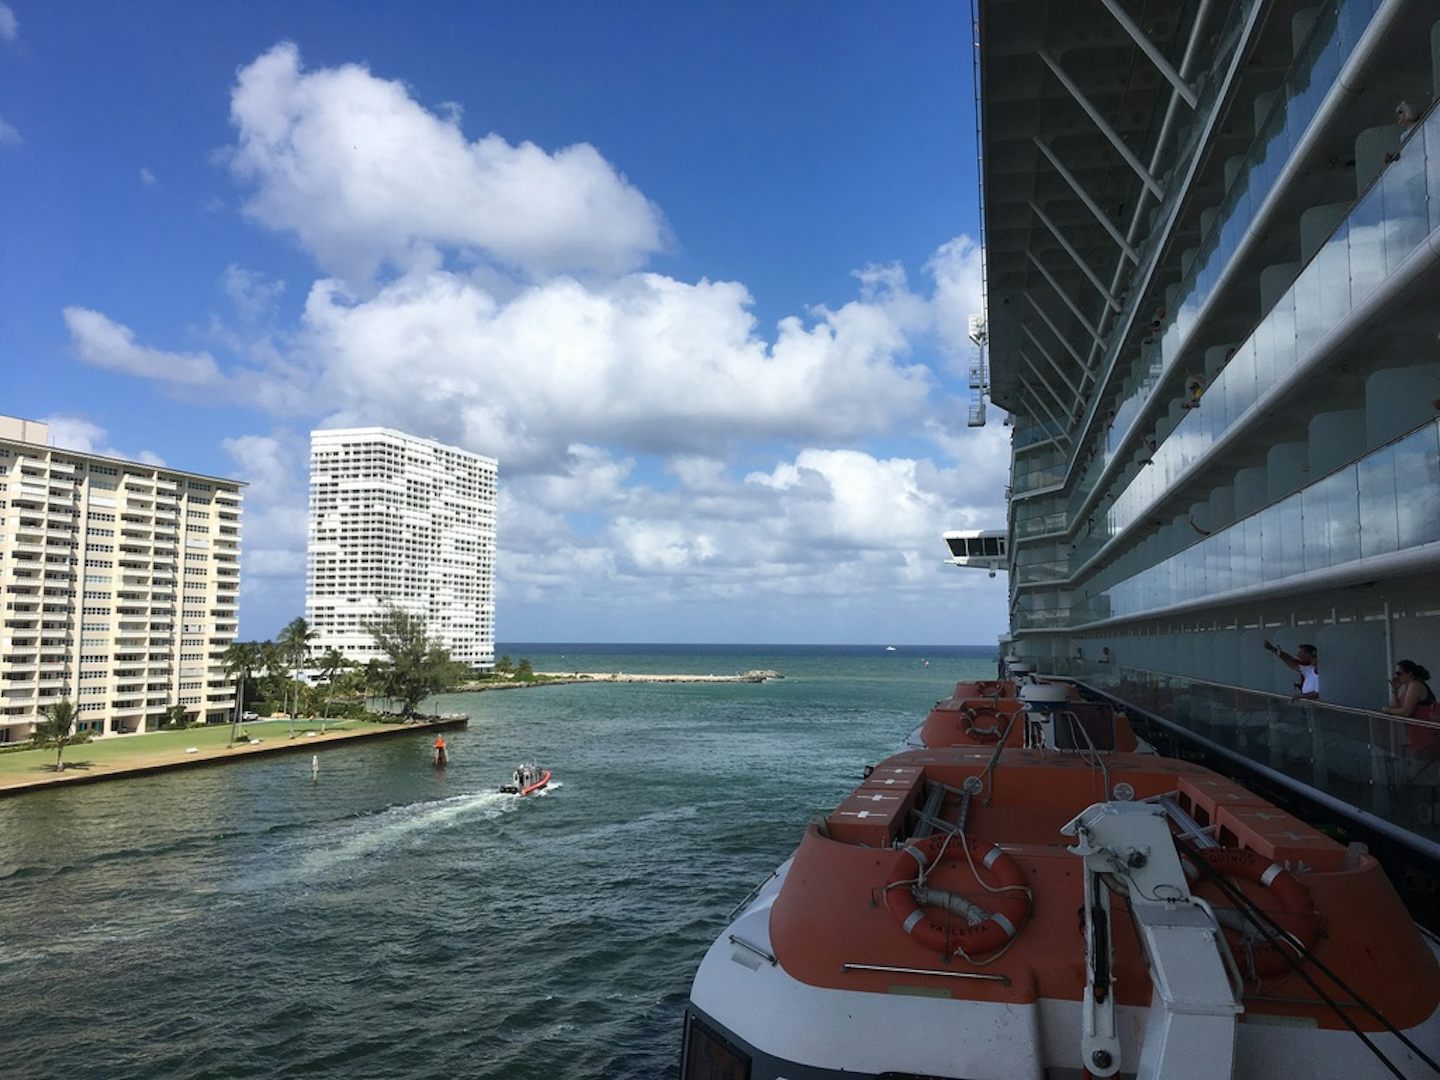 Coast Guard escort departing Ft. Lauderdale.